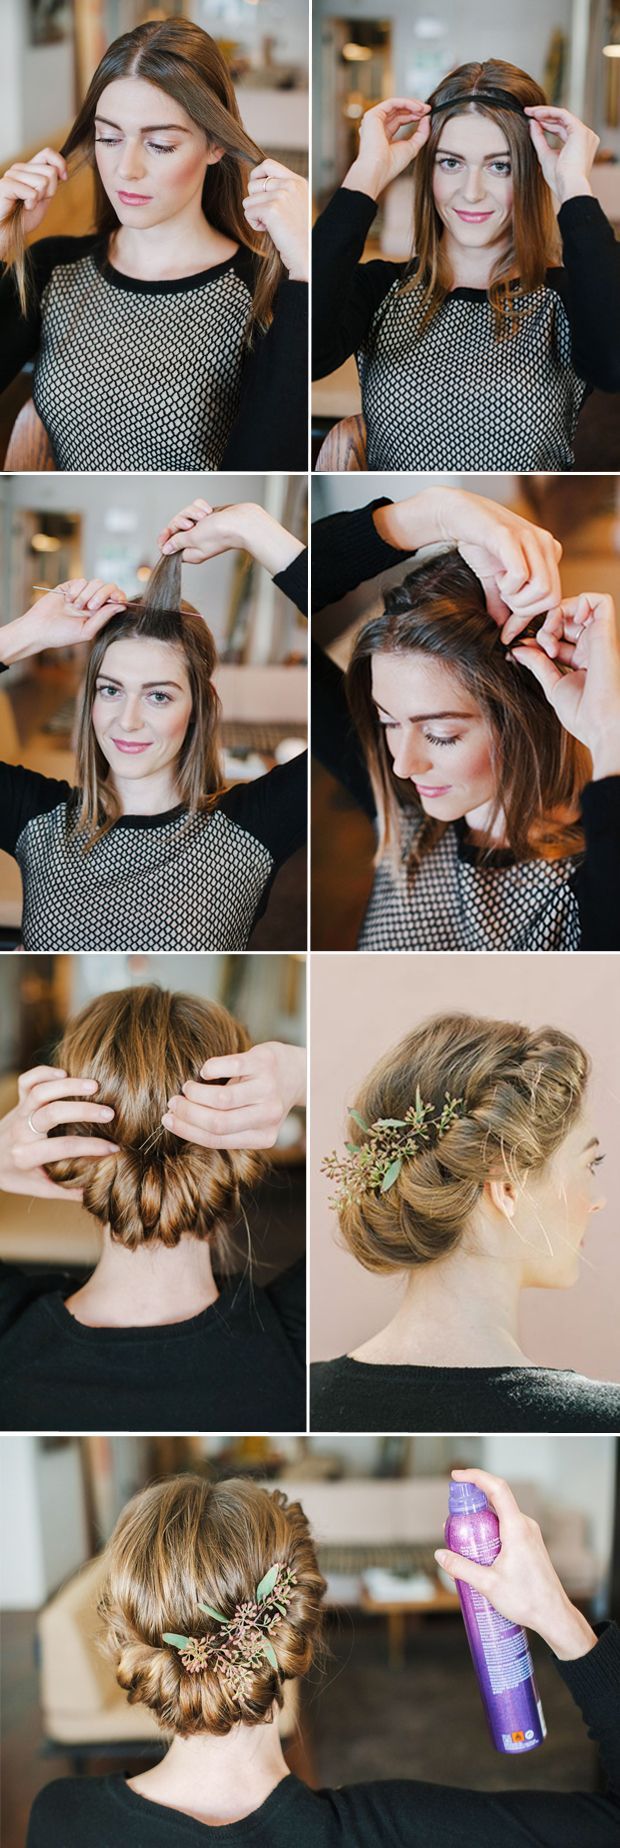 10 Best DIY Wedding Hairstyles with Tutorials -   17 diy wedding hairstyles
 ideas